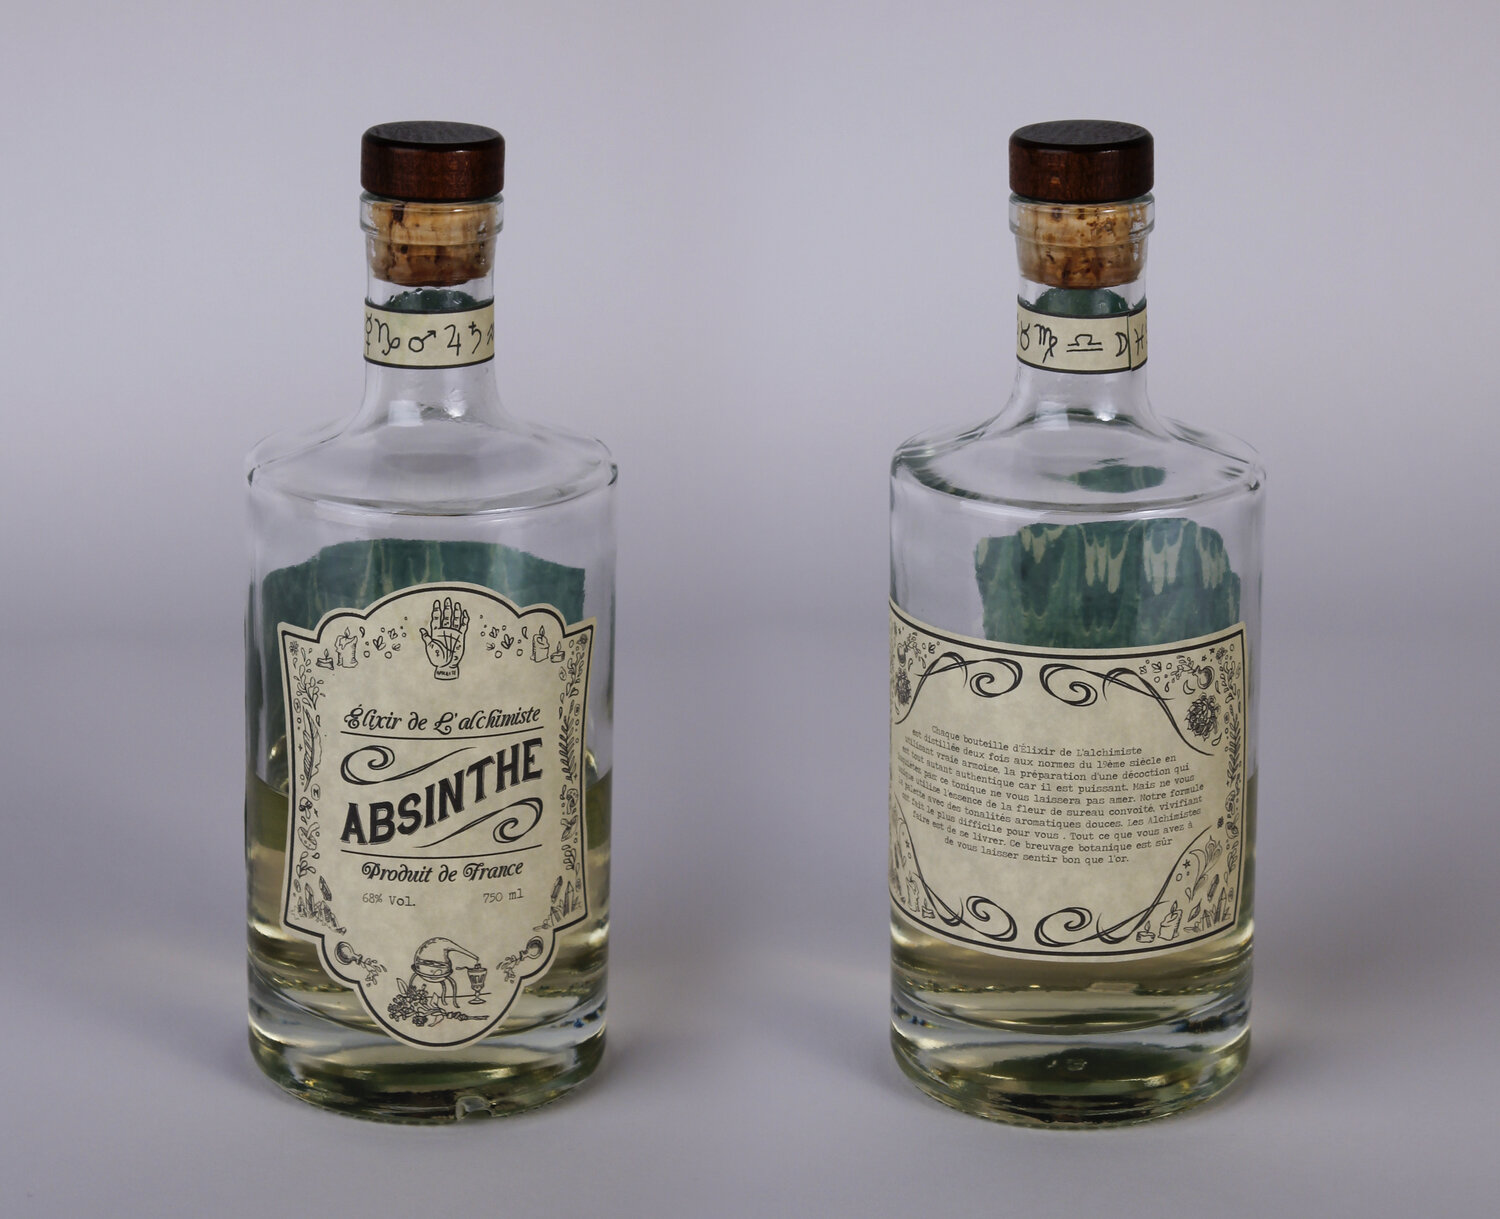 Absinthe+bottle.jpg